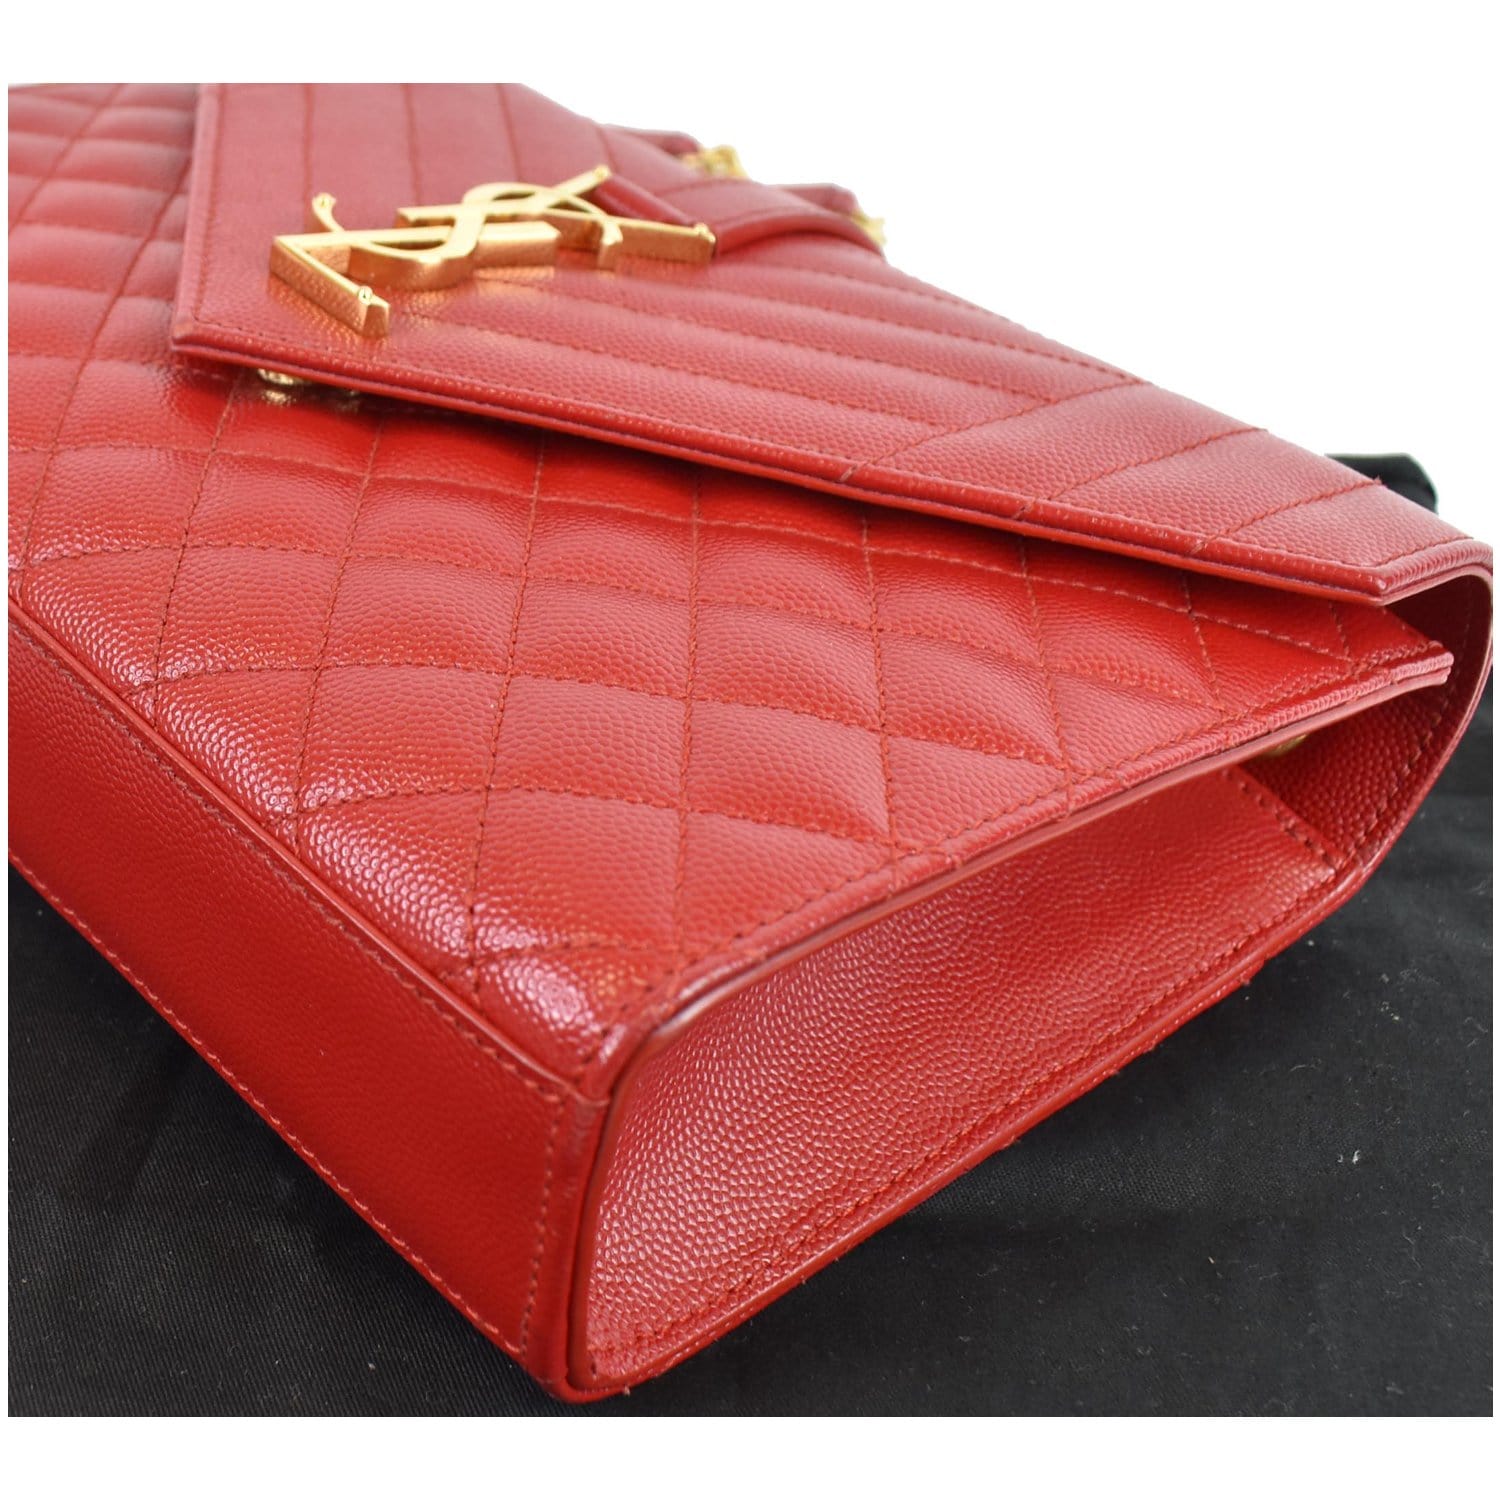 Saint Laurent Envelope Embossed Leather Medium Chain Bag 